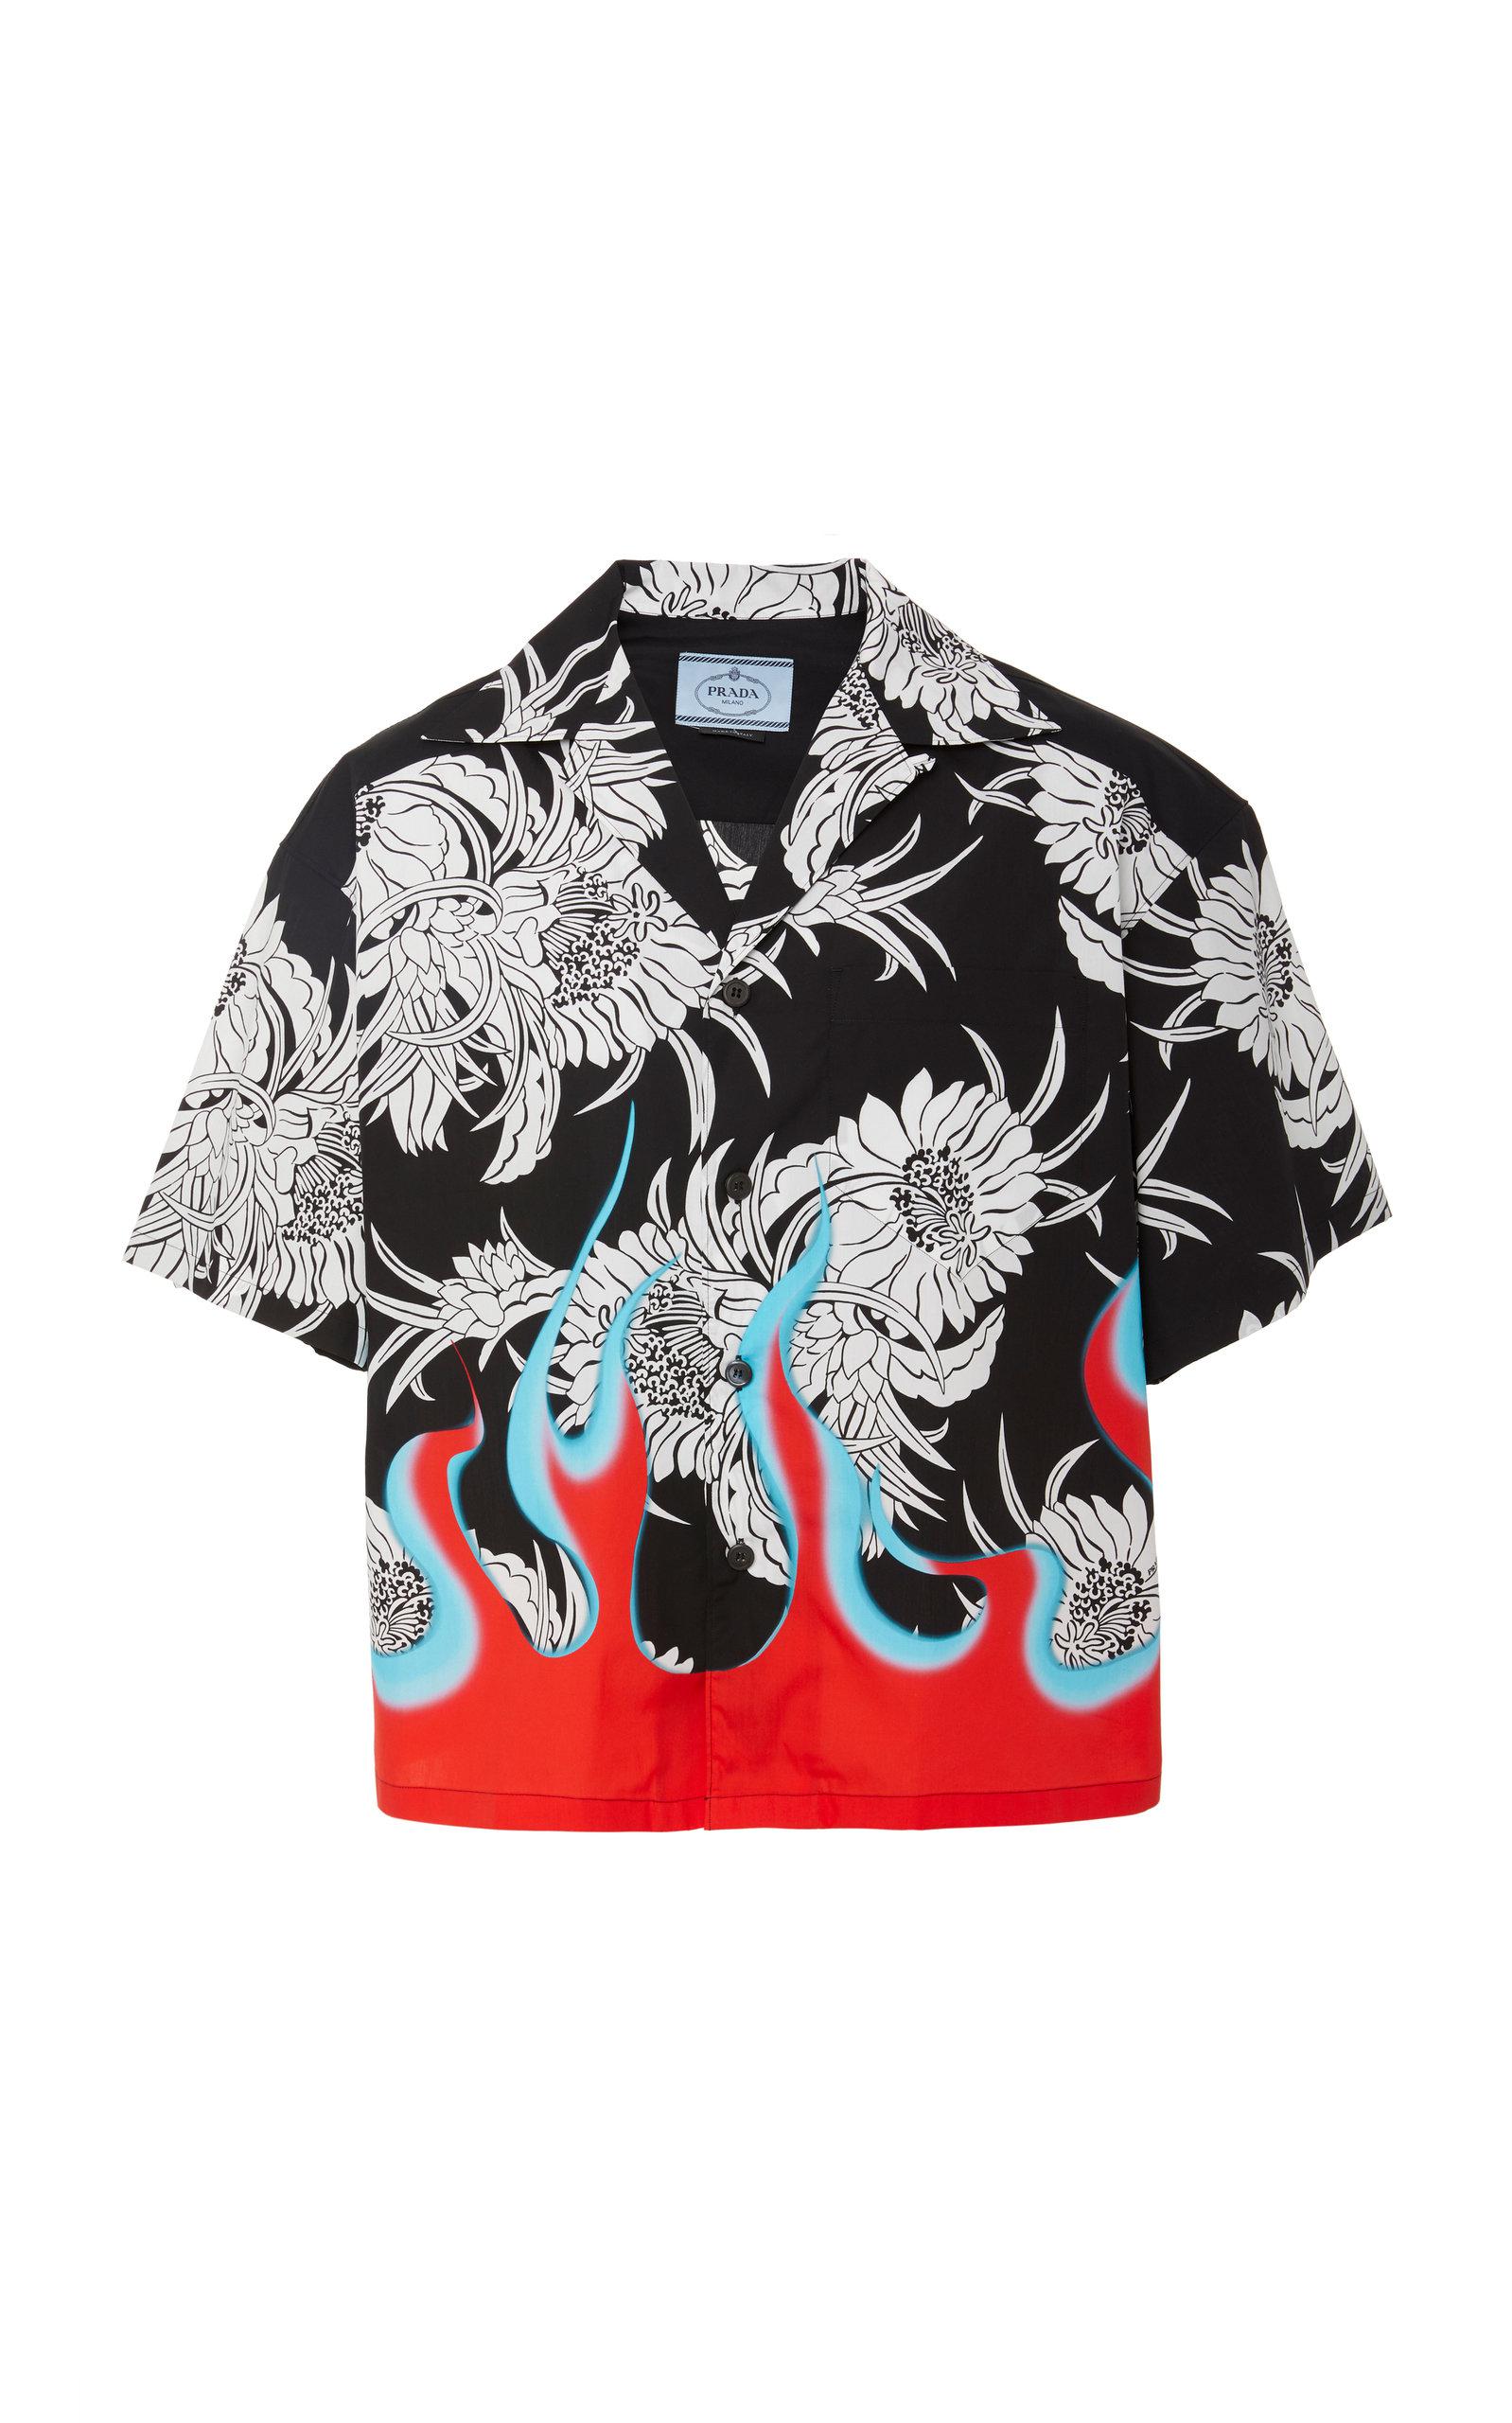 Prada Cotton Flame Print Shirt in Black for Men - Lyst